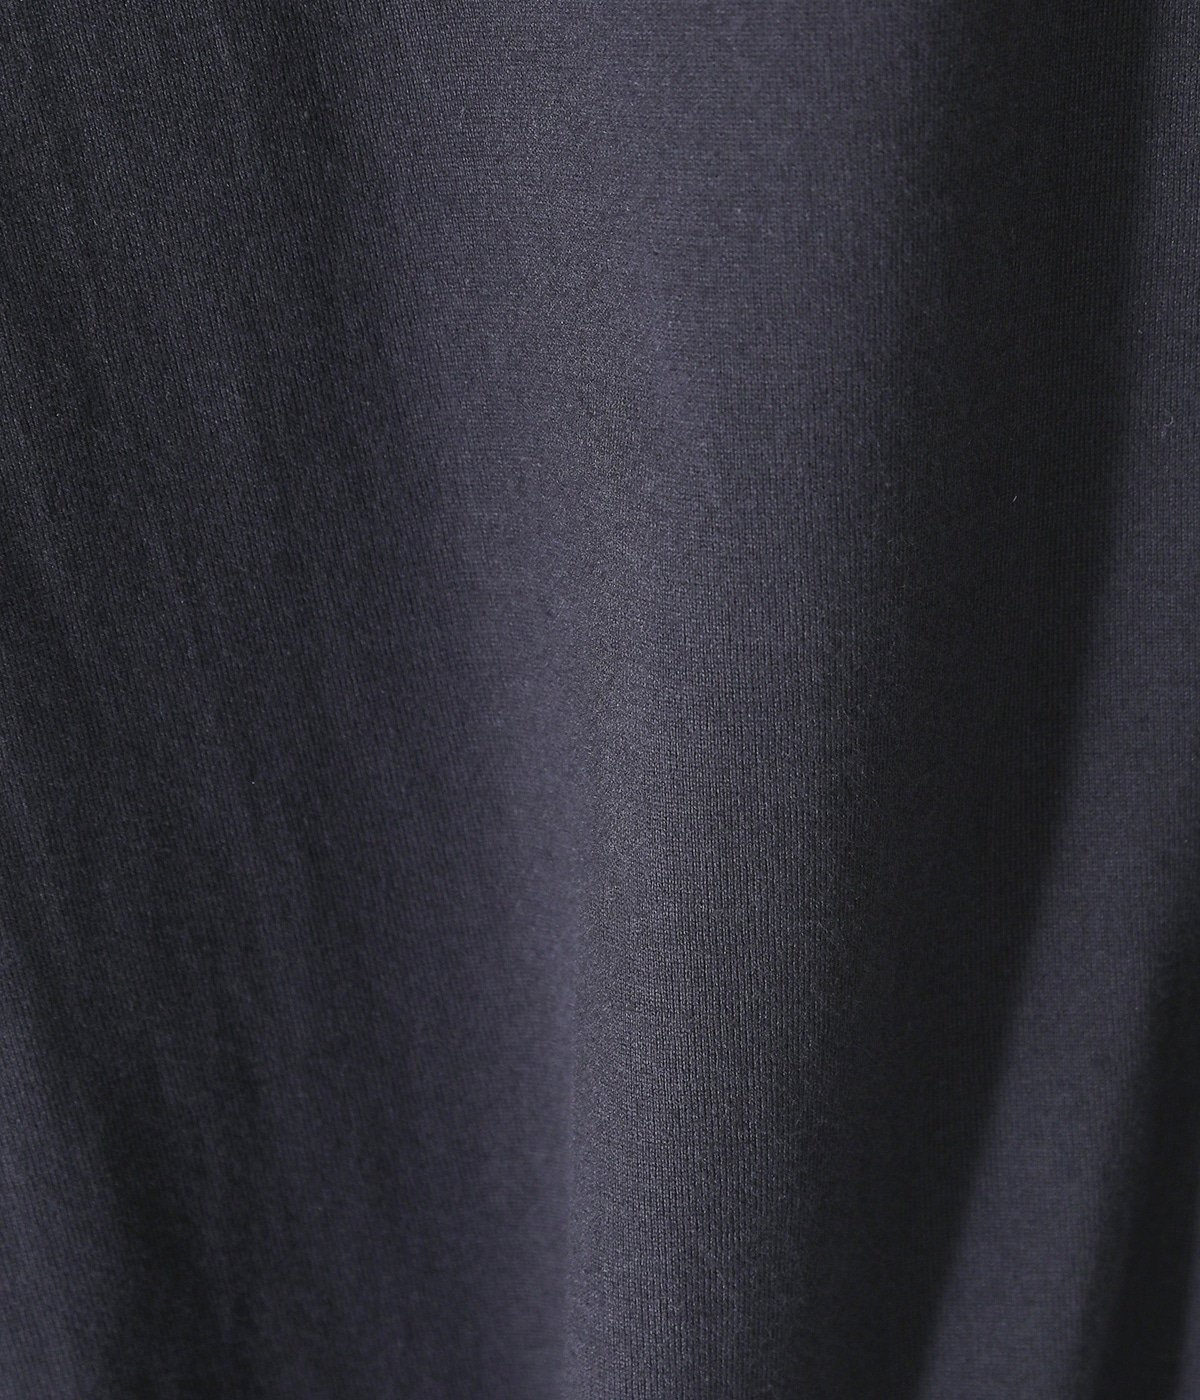 【ONLY ARK】別注 40/2 Short Sleeve Elizabeth Taylor (BY Frank Worth)